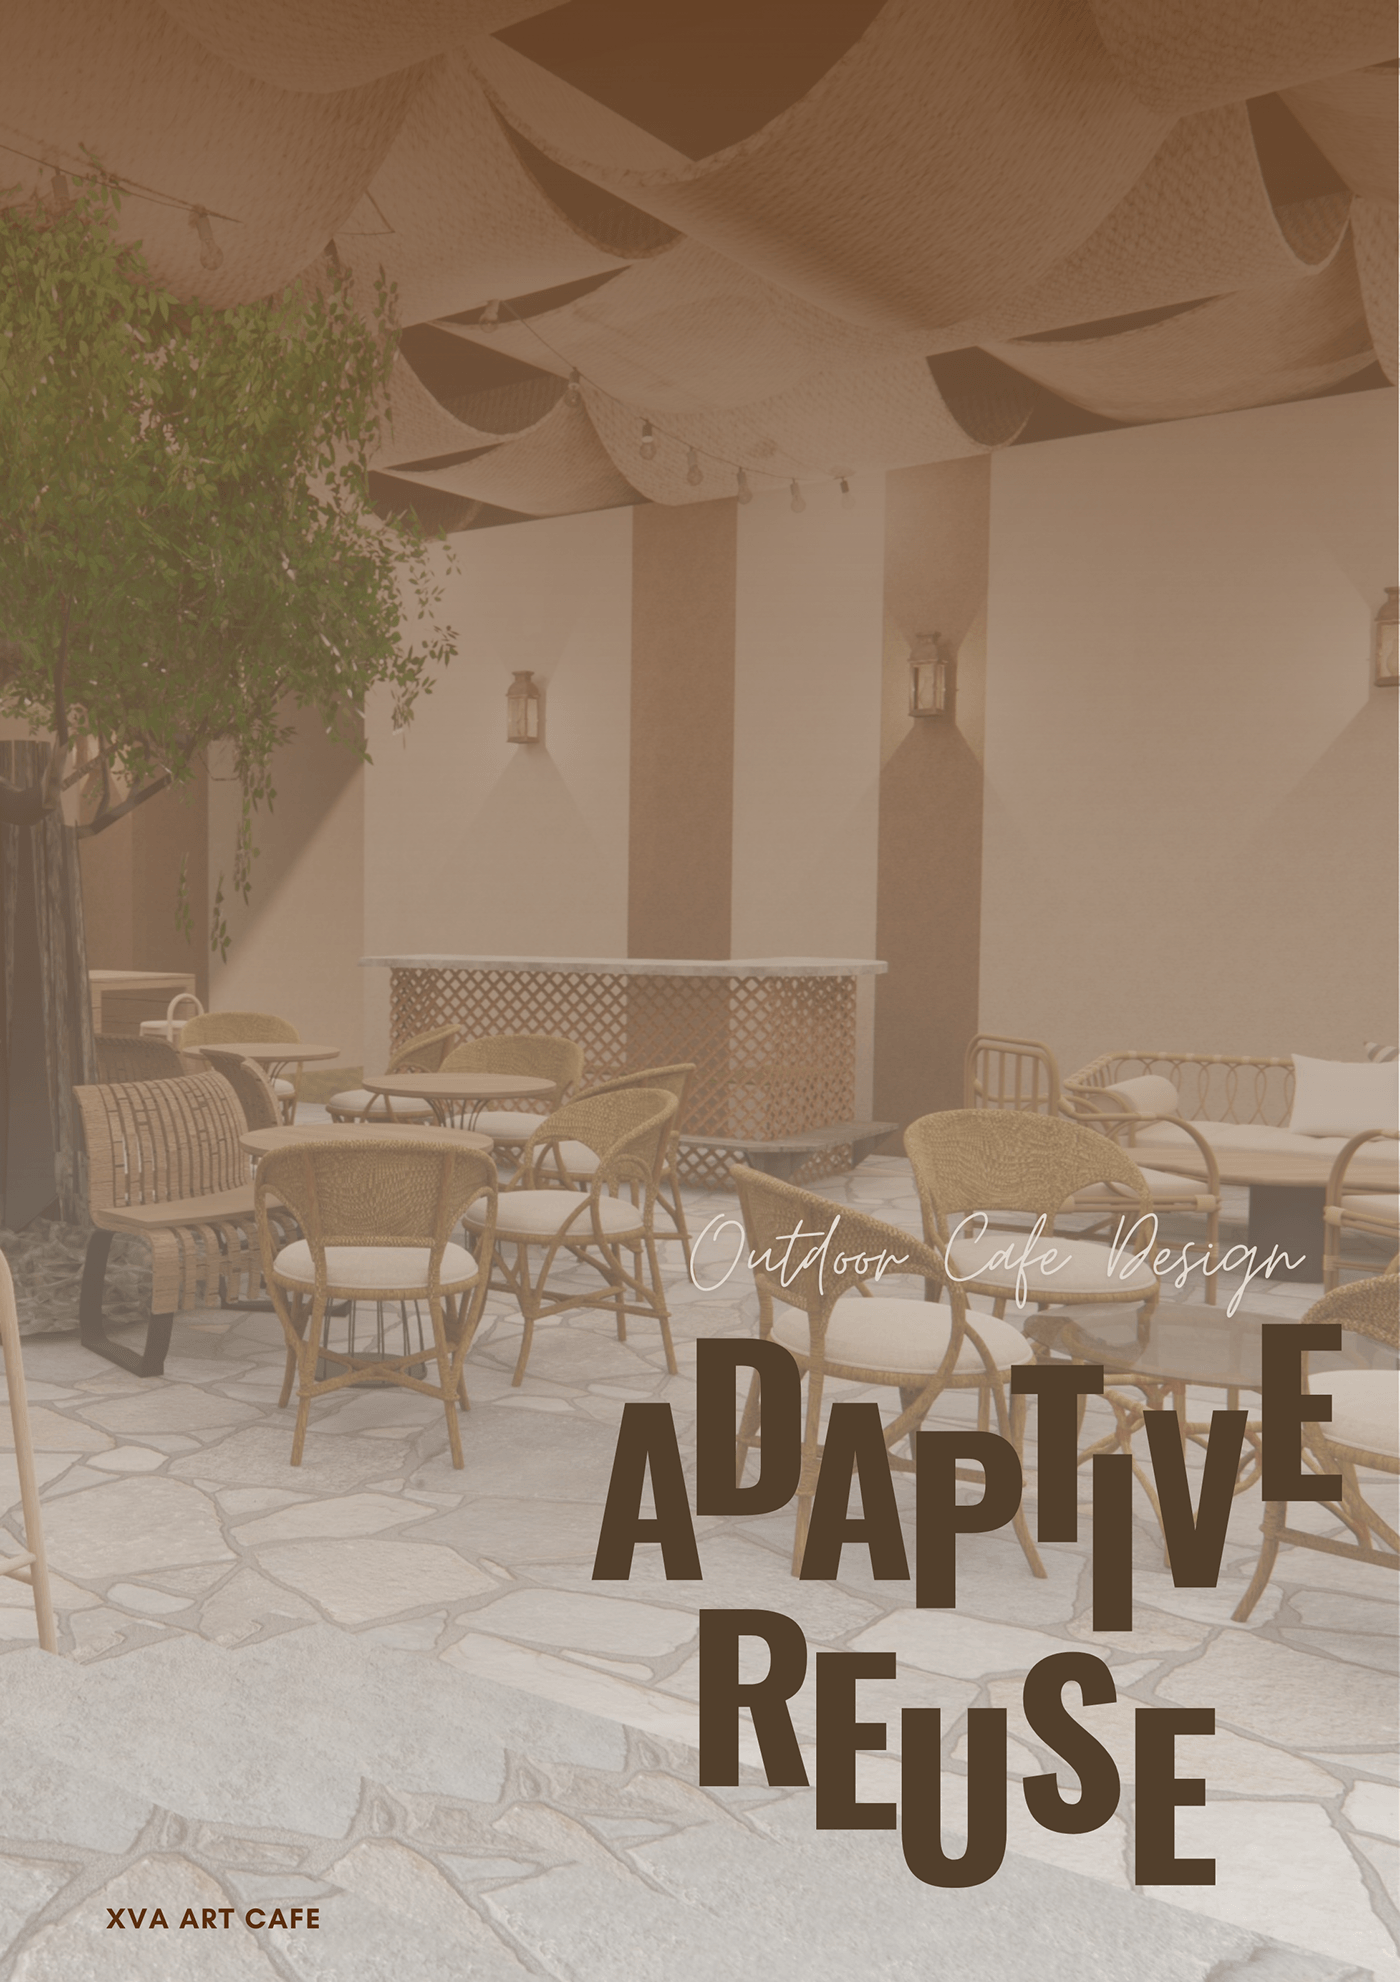 dubai art cafe adaptive reuse outdoor cafe design